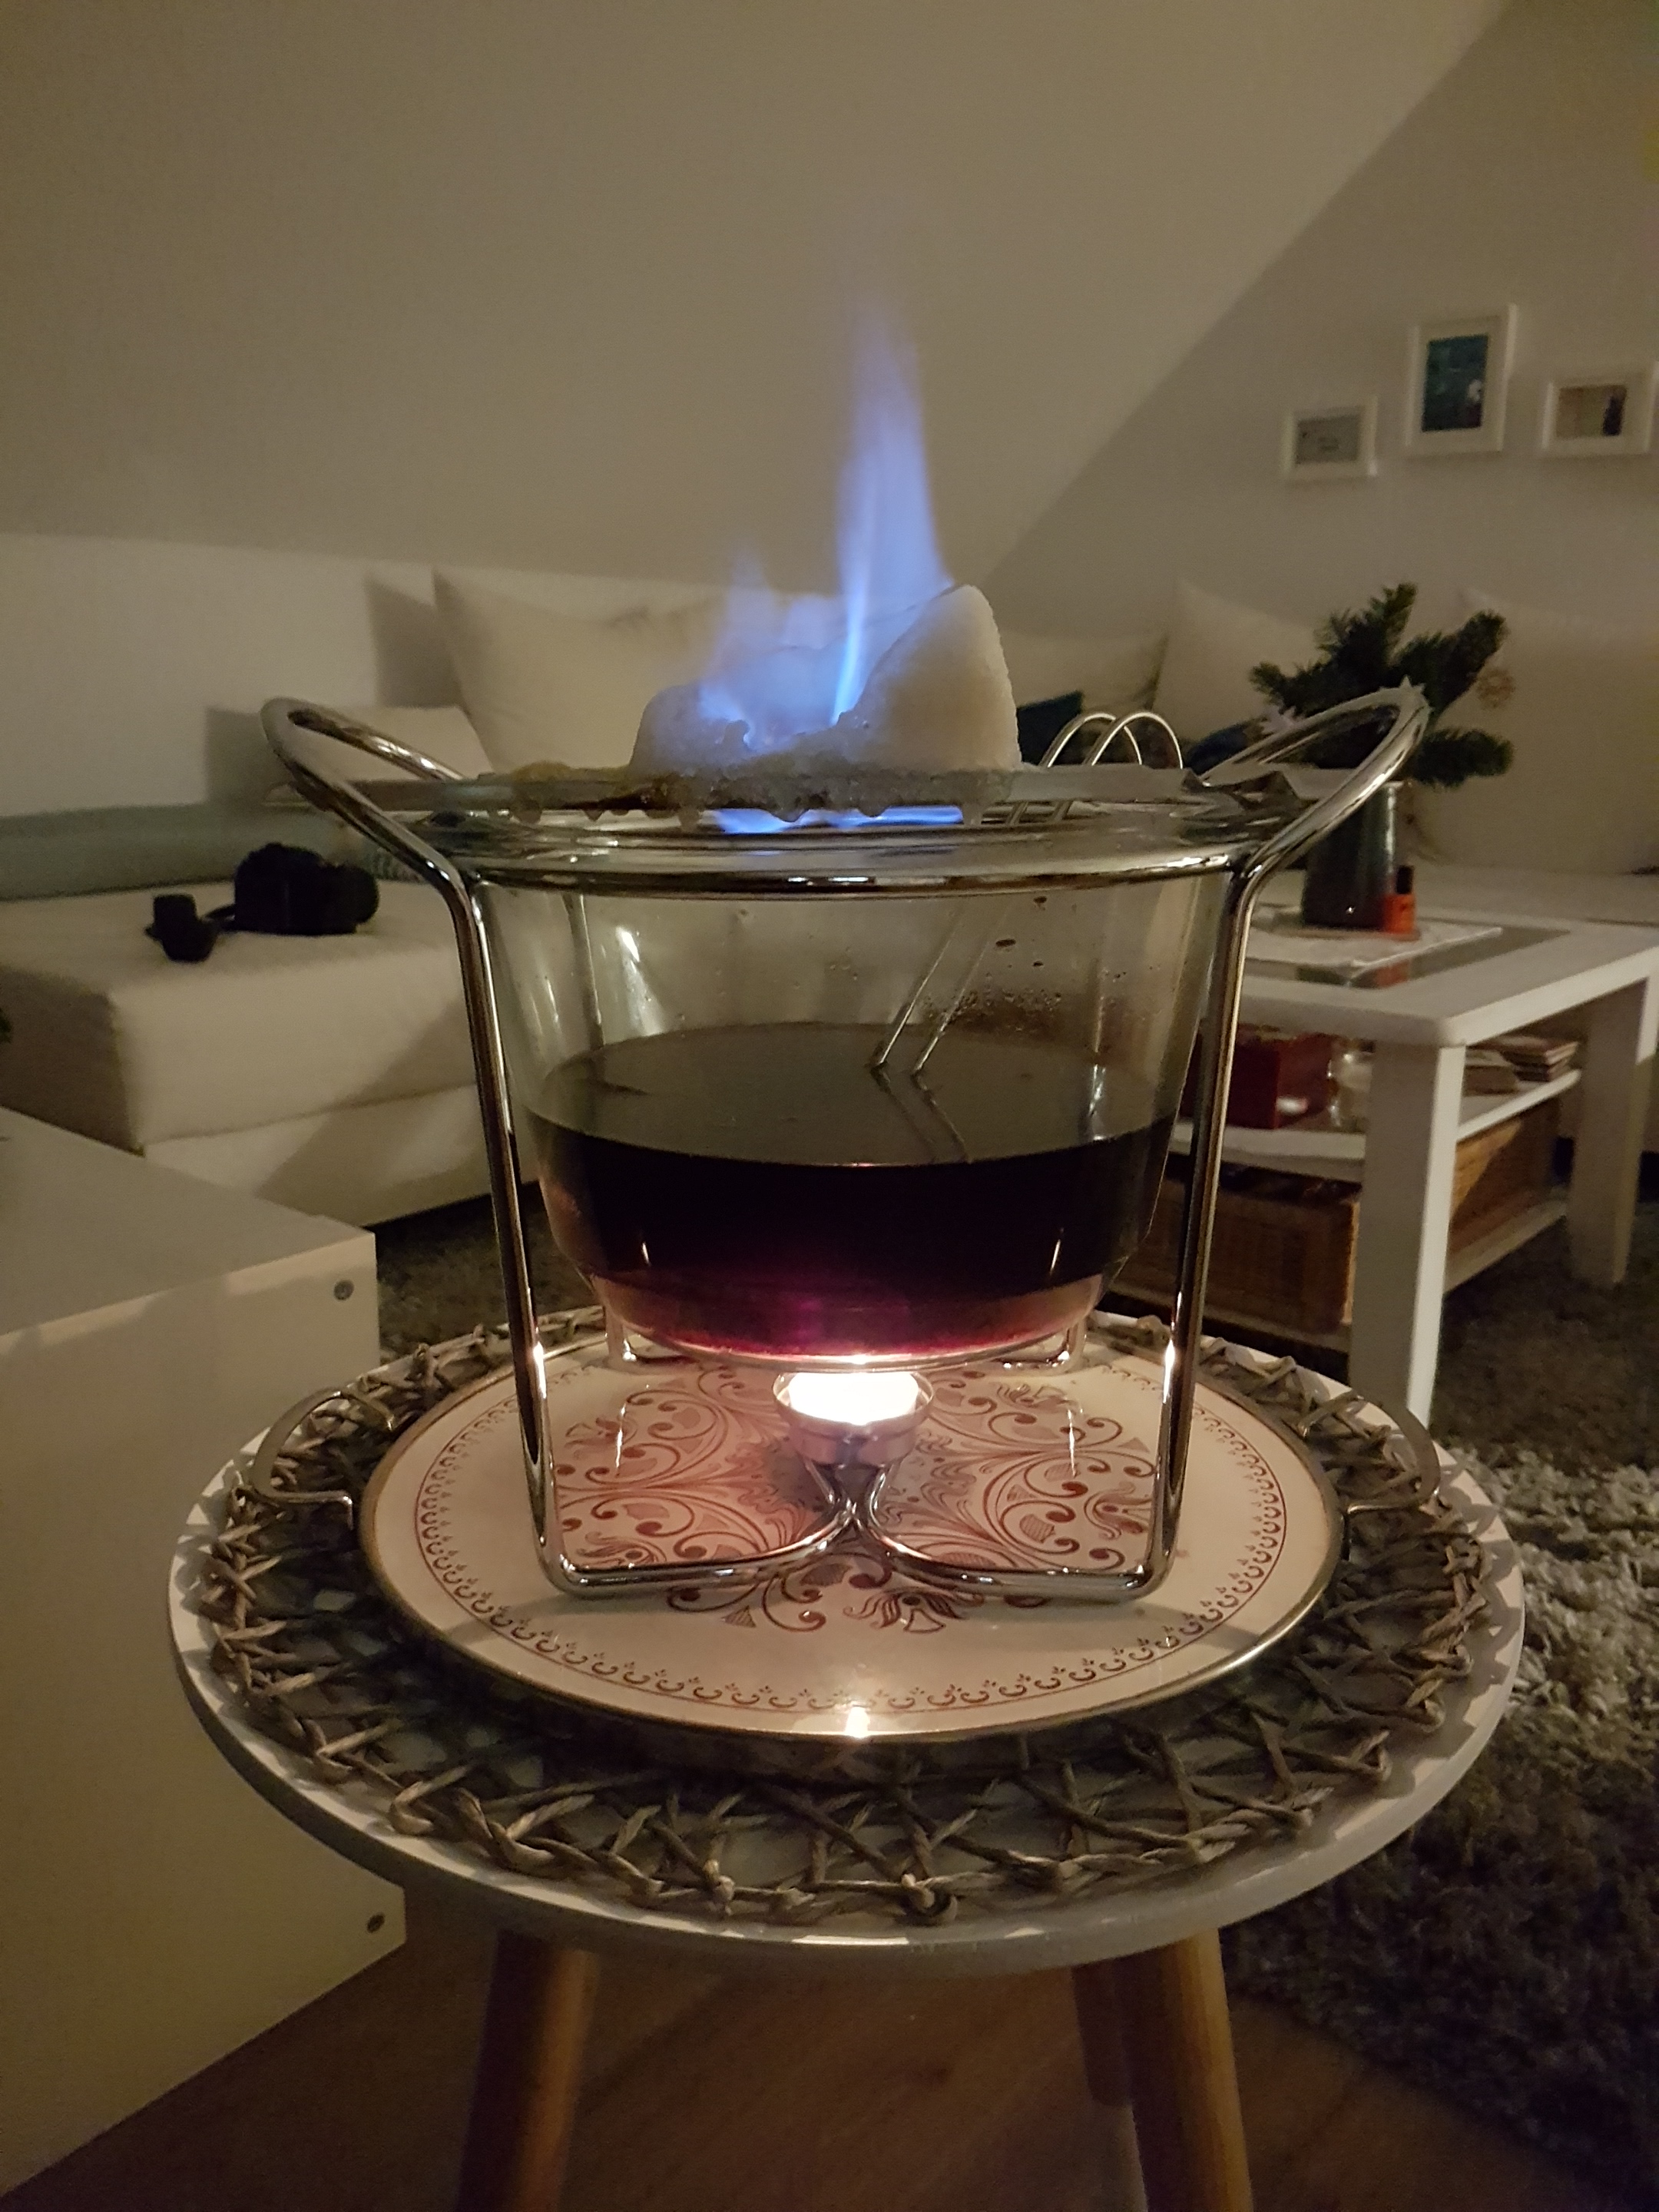 Feuerzangenbowle — Rezepte Suchen